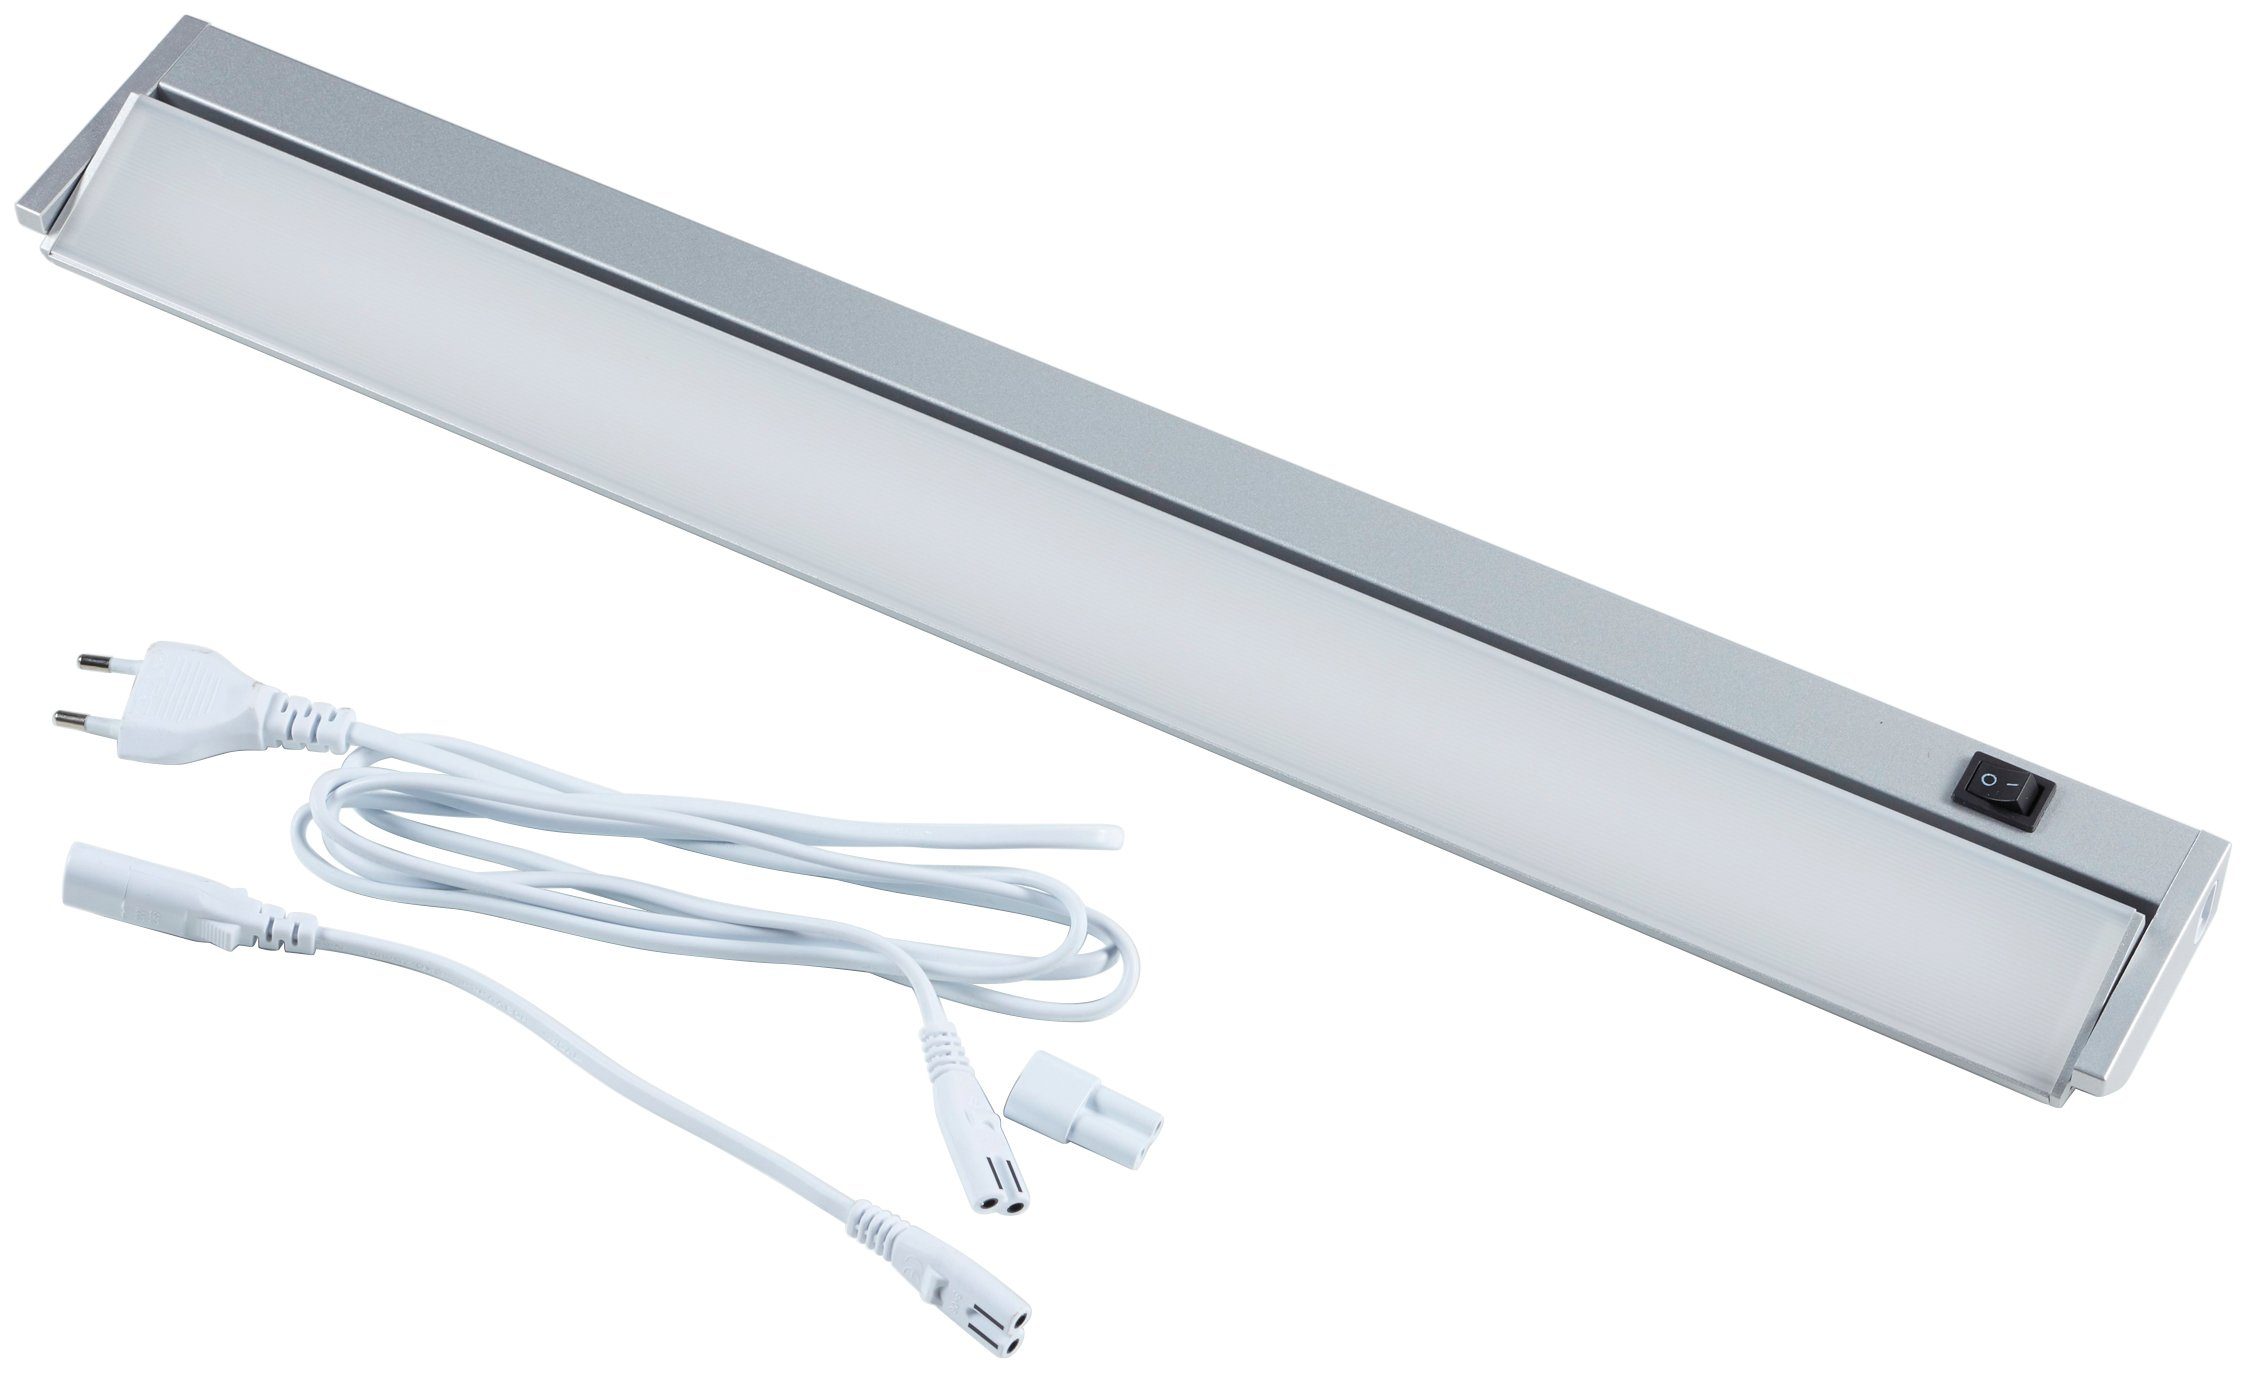 Loevschall LED Unterbauleuchte Hohe Ein-/Ausschalter, Lichtausbeute, integriert, LED LED Neutralweiß, Striplight 579mm, schwenkbar fest